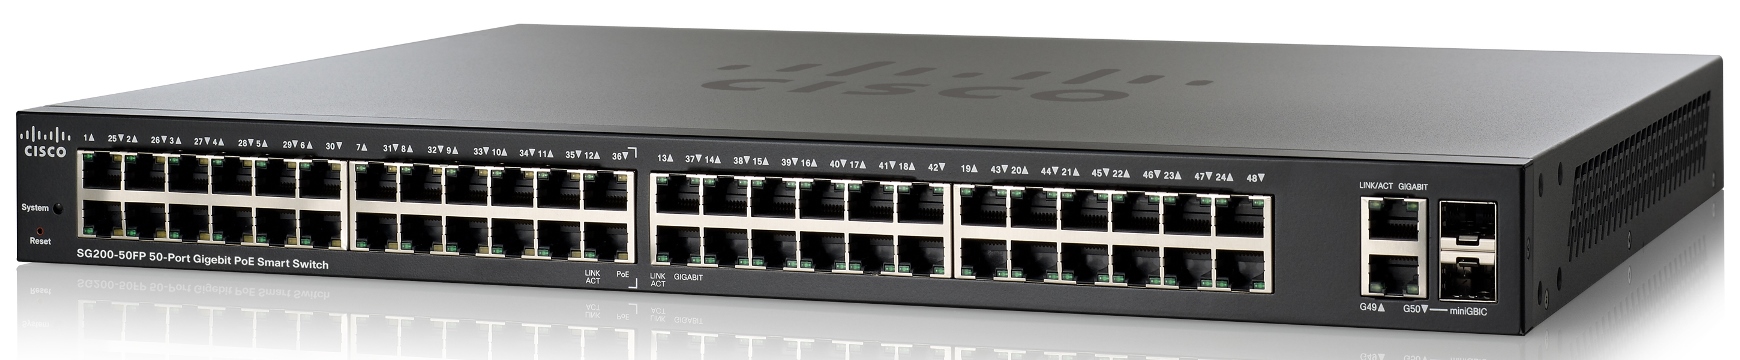 Cisco SG200-50FP, 50xGbit PoE Smart, SG200-50FP-EU